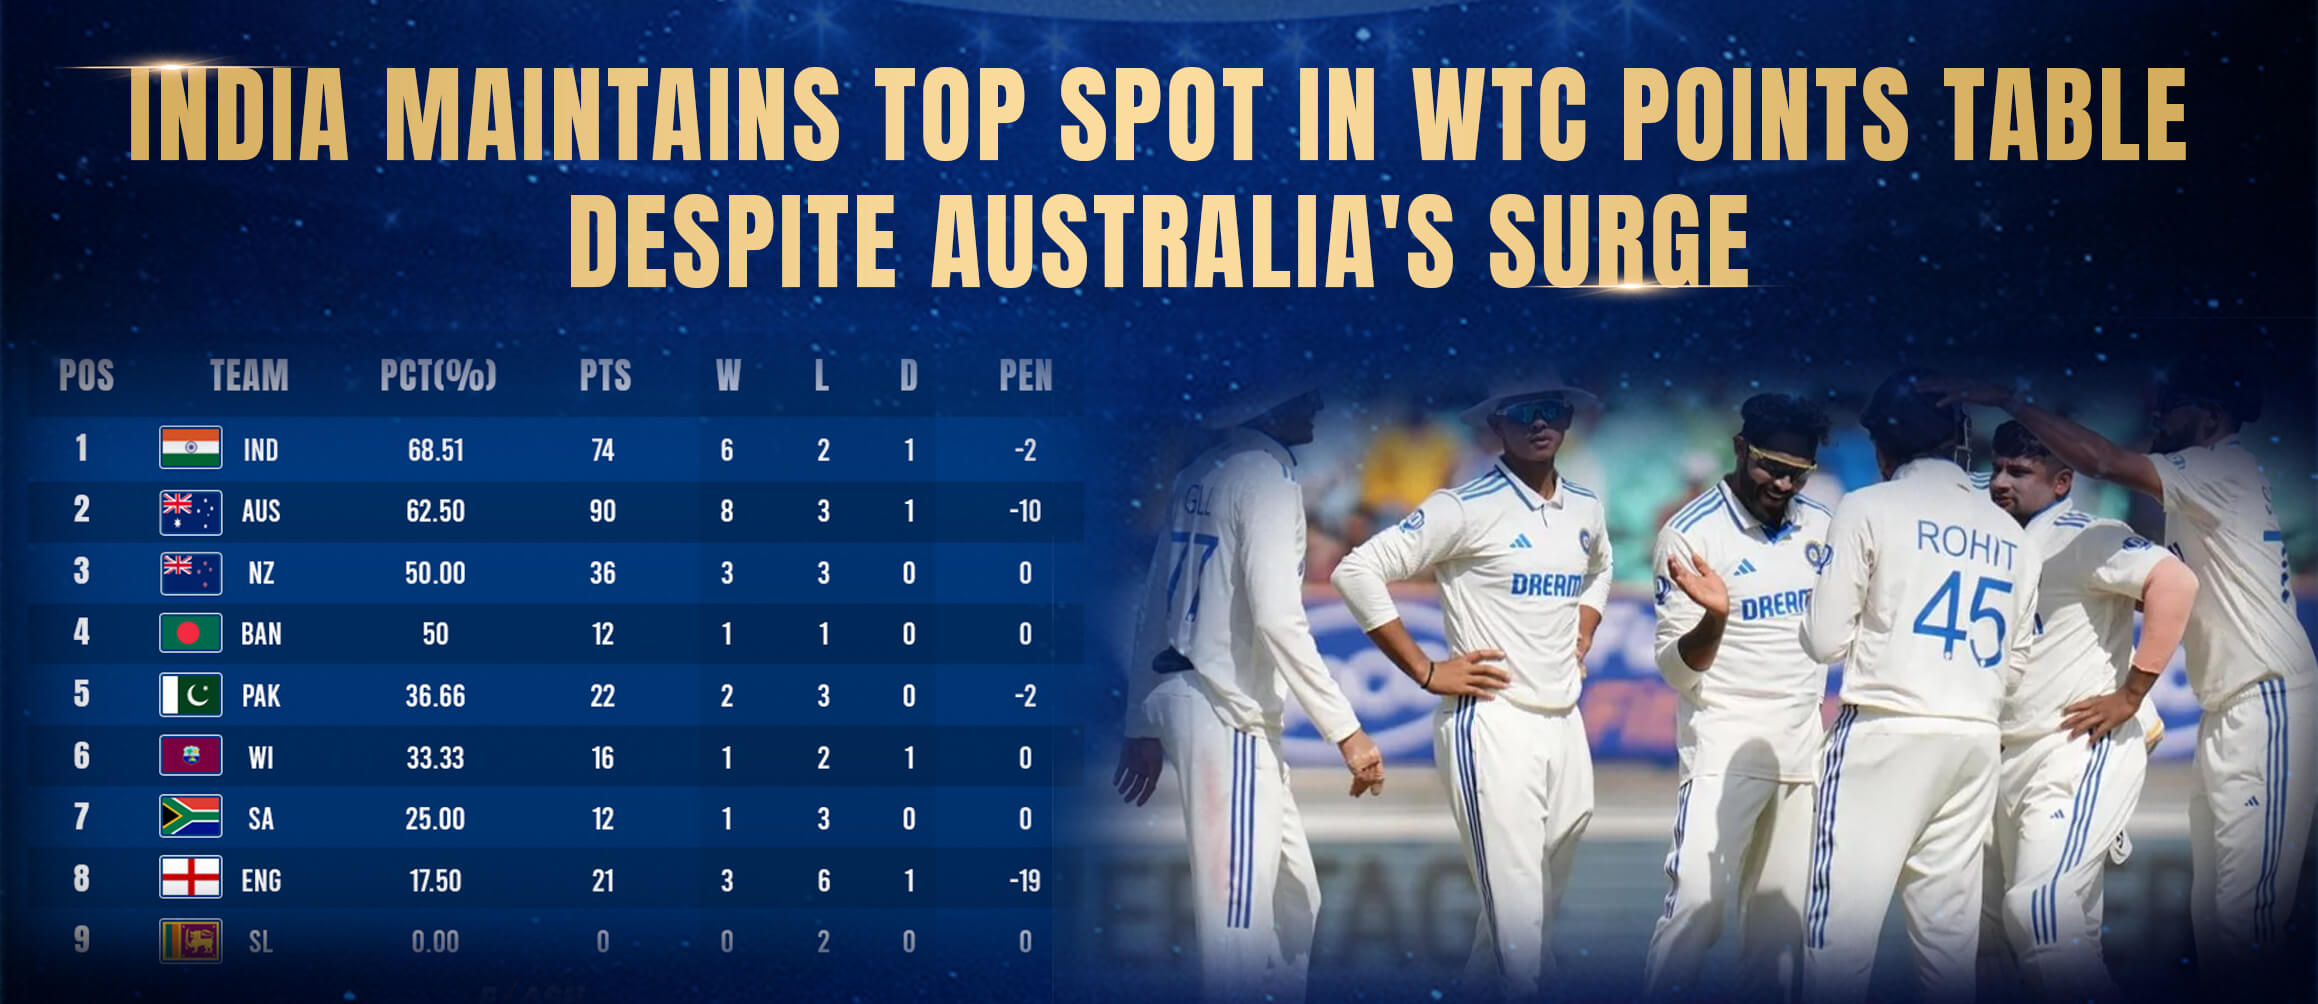 India Maintains Top Spot in WTC Points Table Despite Australia’s Surge